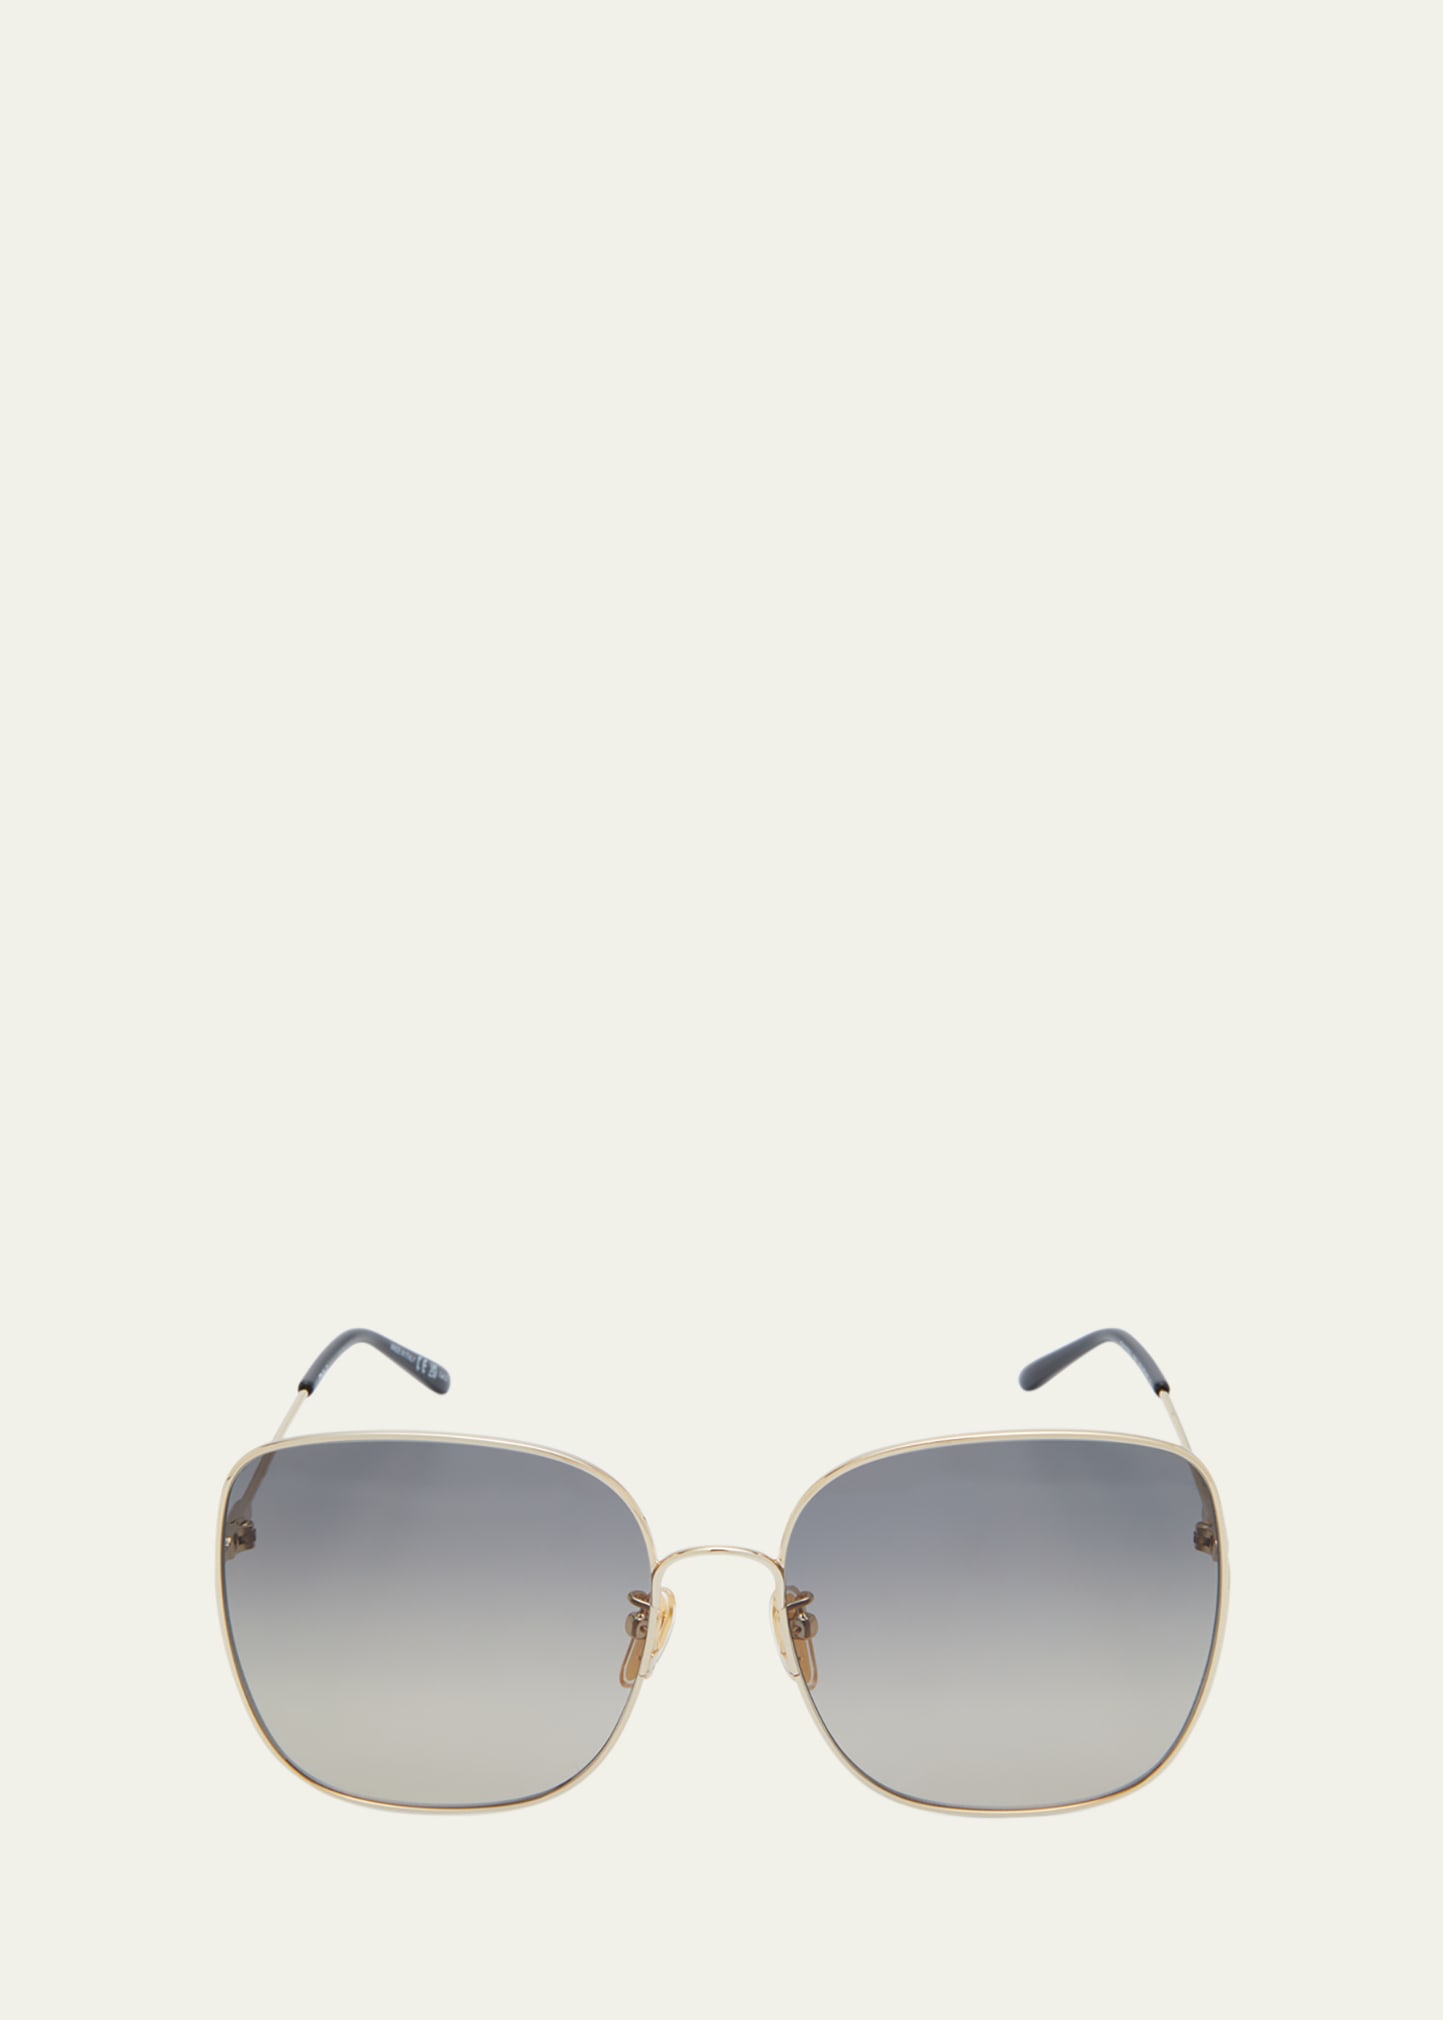 Chloé Gradient Square Metal Sunglasses In Blue